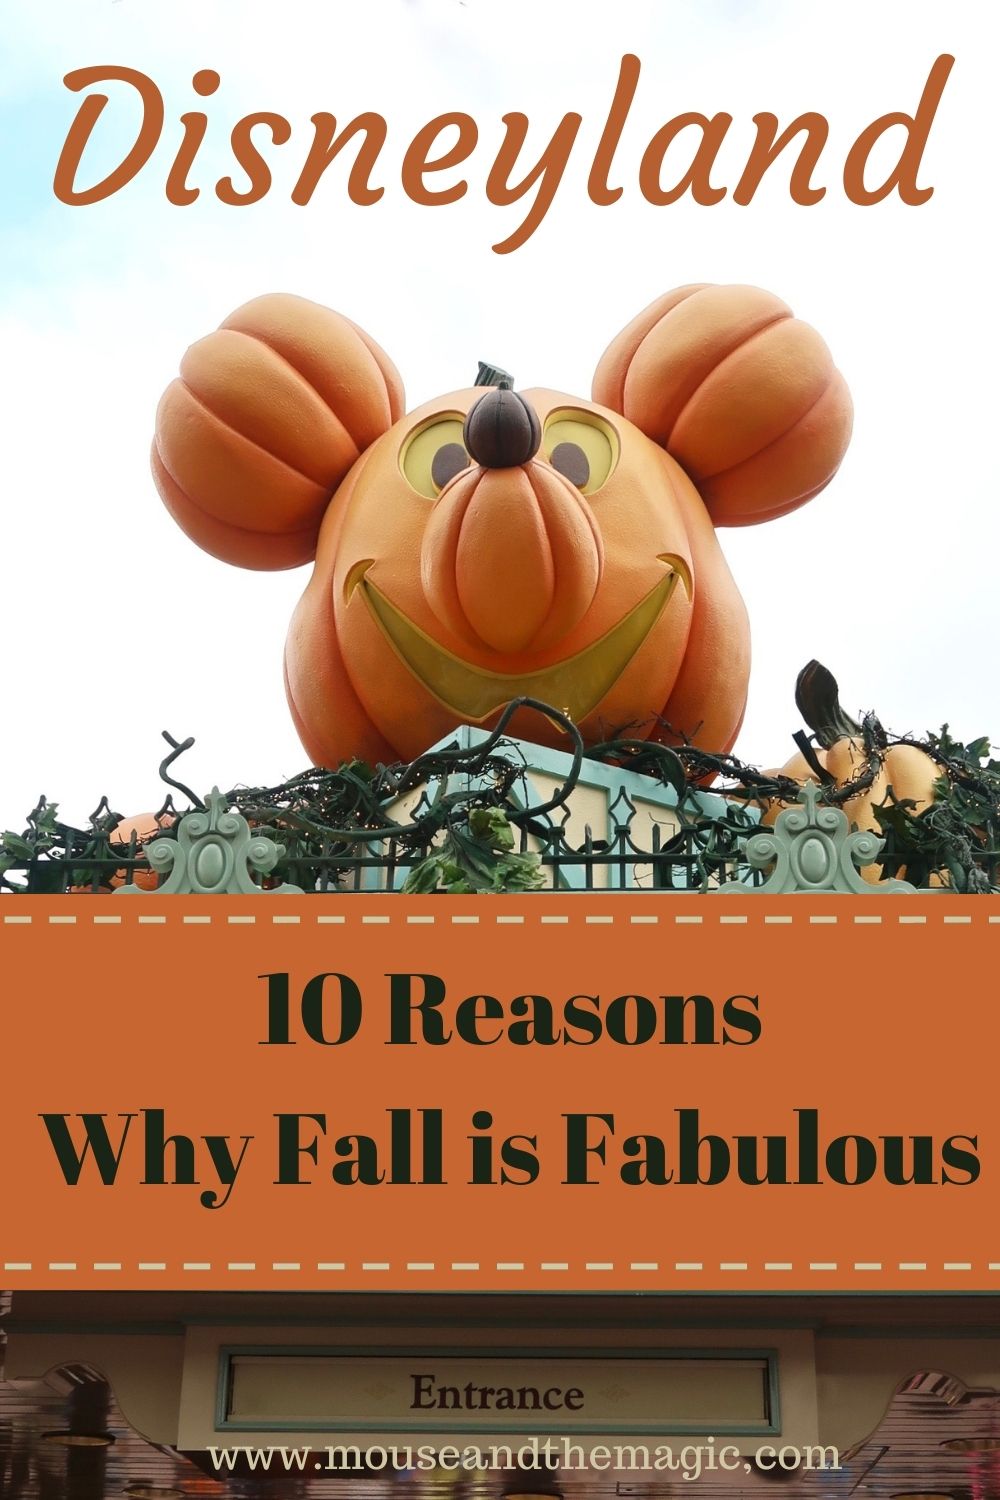 10 Reasons Why Fall is Fabulous at Disneyland